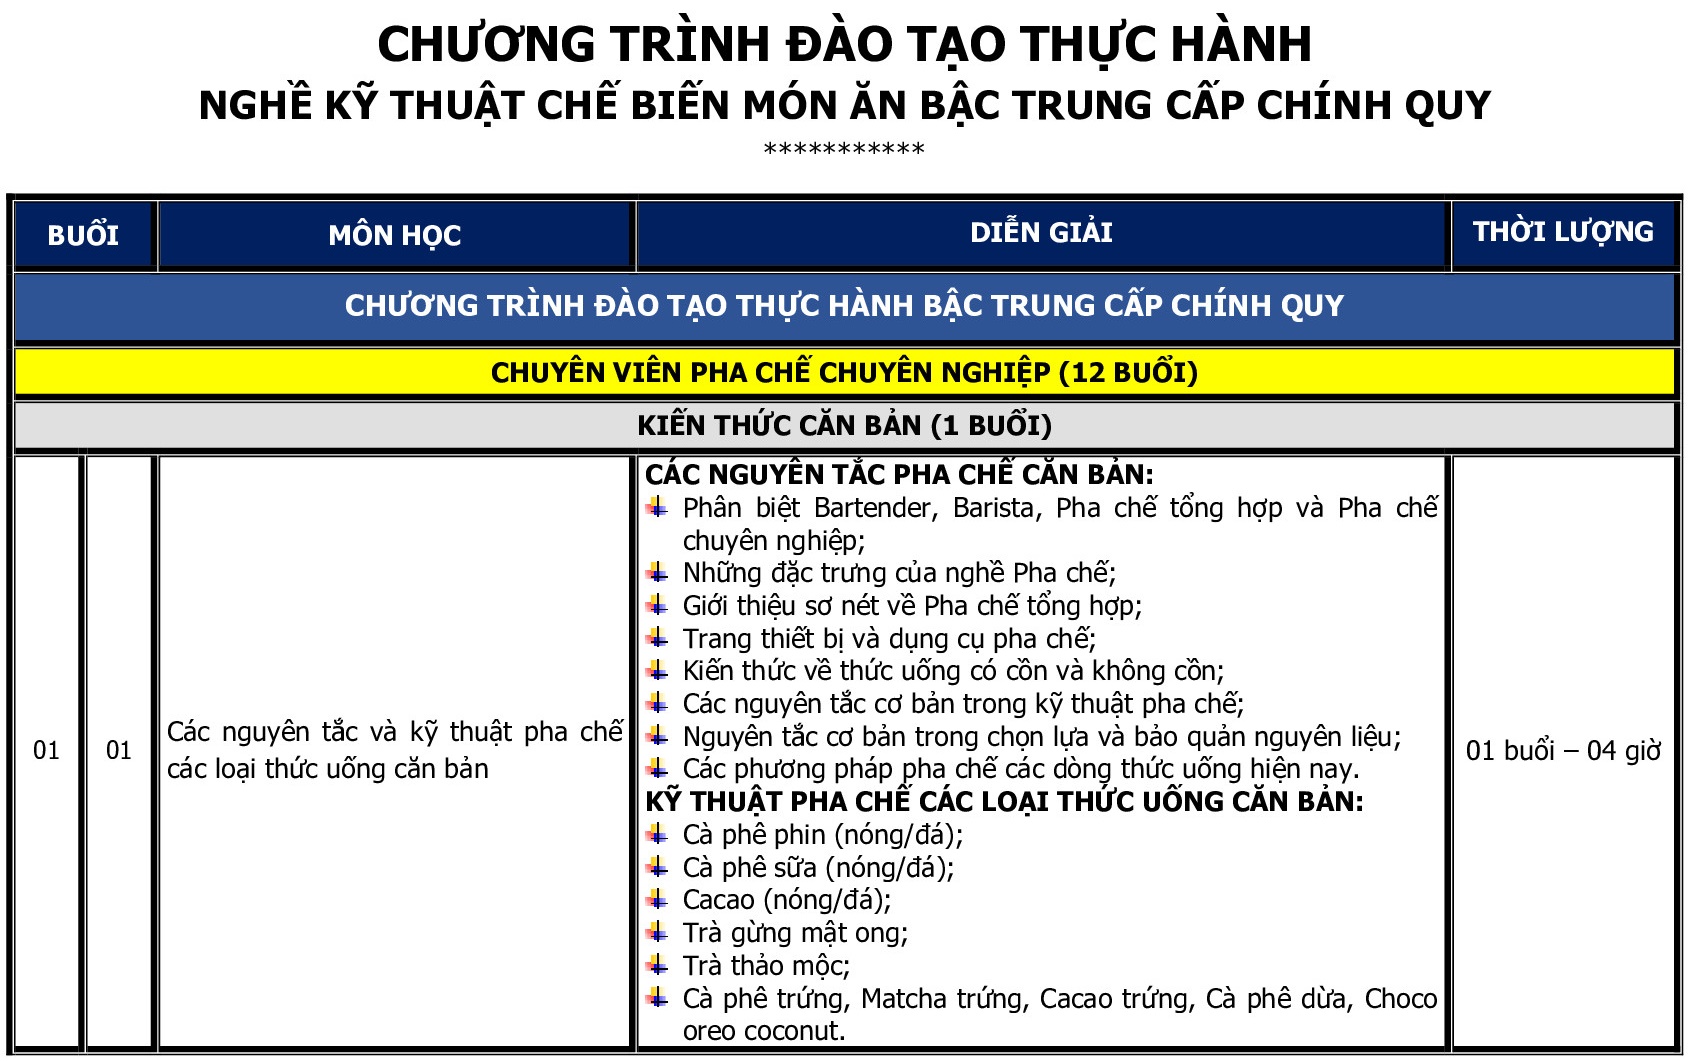 CT DAO TAO THUC HANH BAC TRUNG CAP_p001